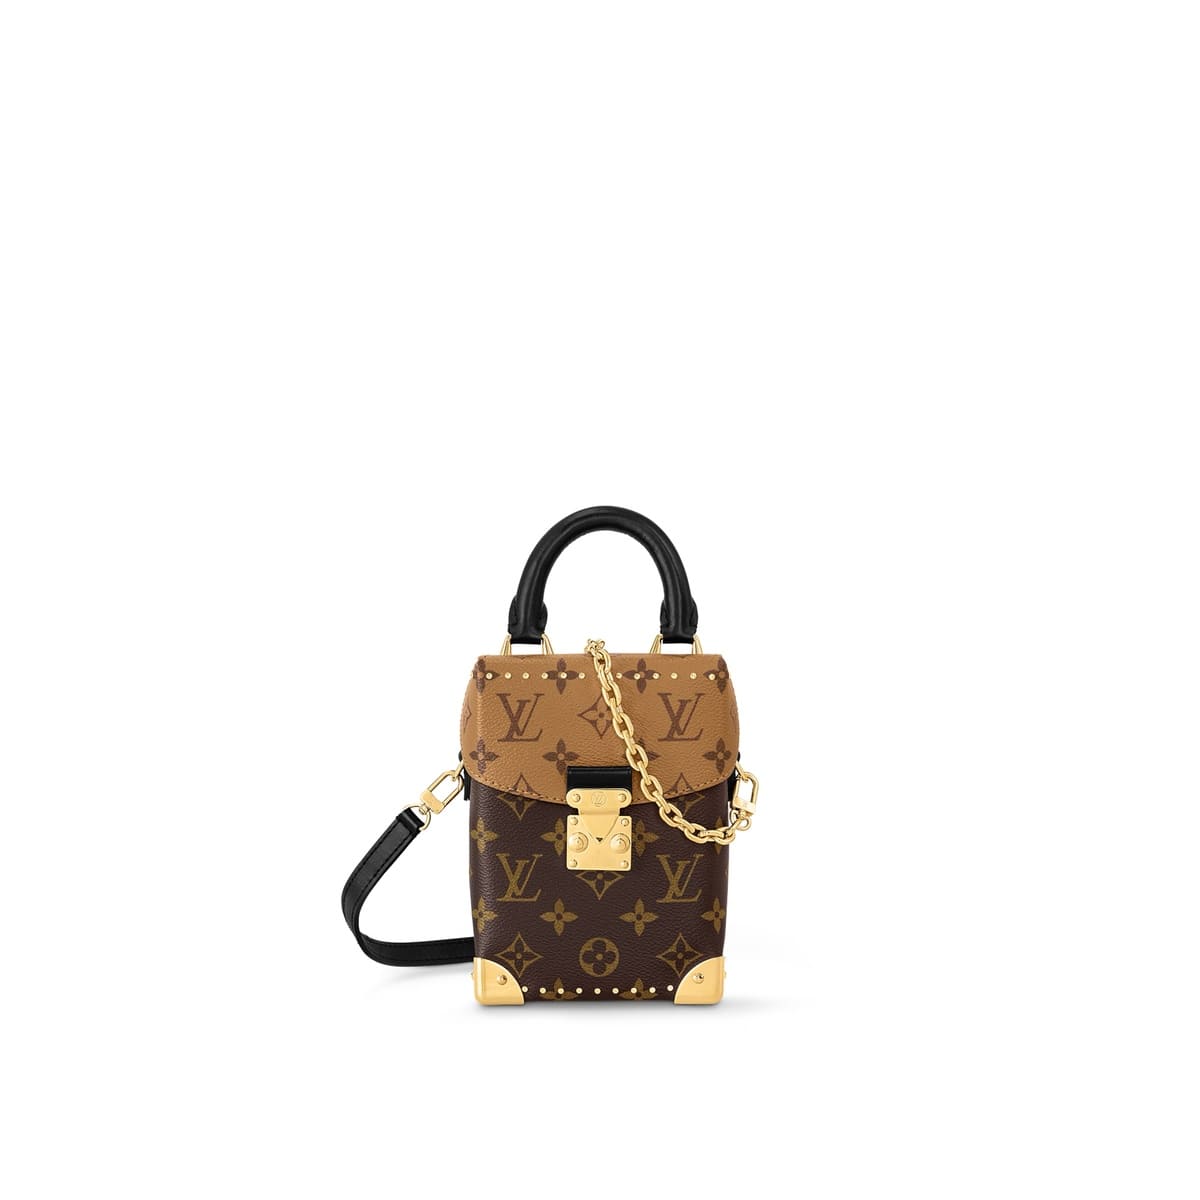 Louis Vuitton Classic Bag Prices, Bragmybag